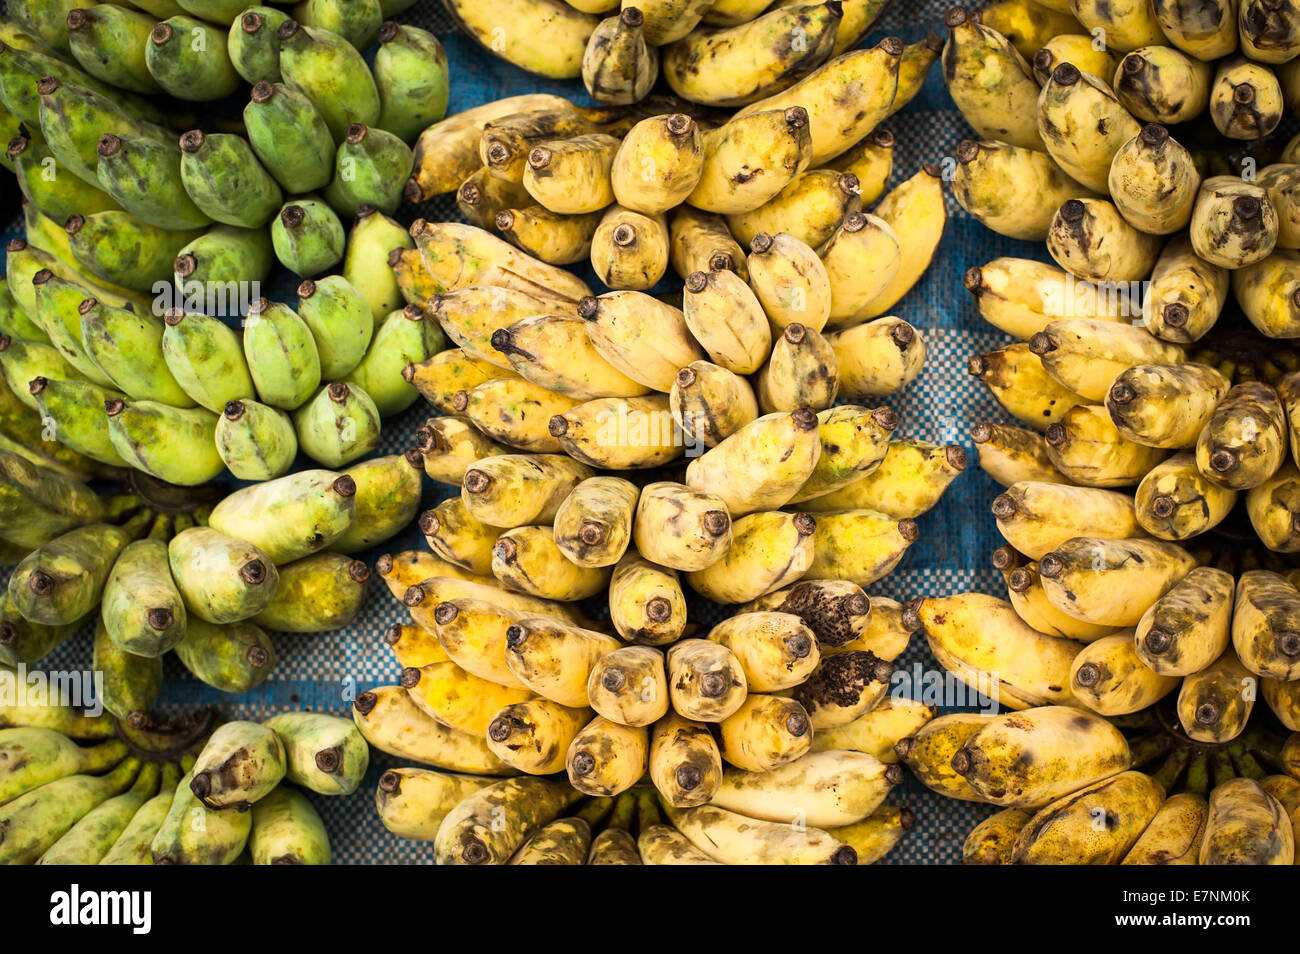 Tropical fruits natural background. Fresh bananas at  outdoors market place Stock Photo